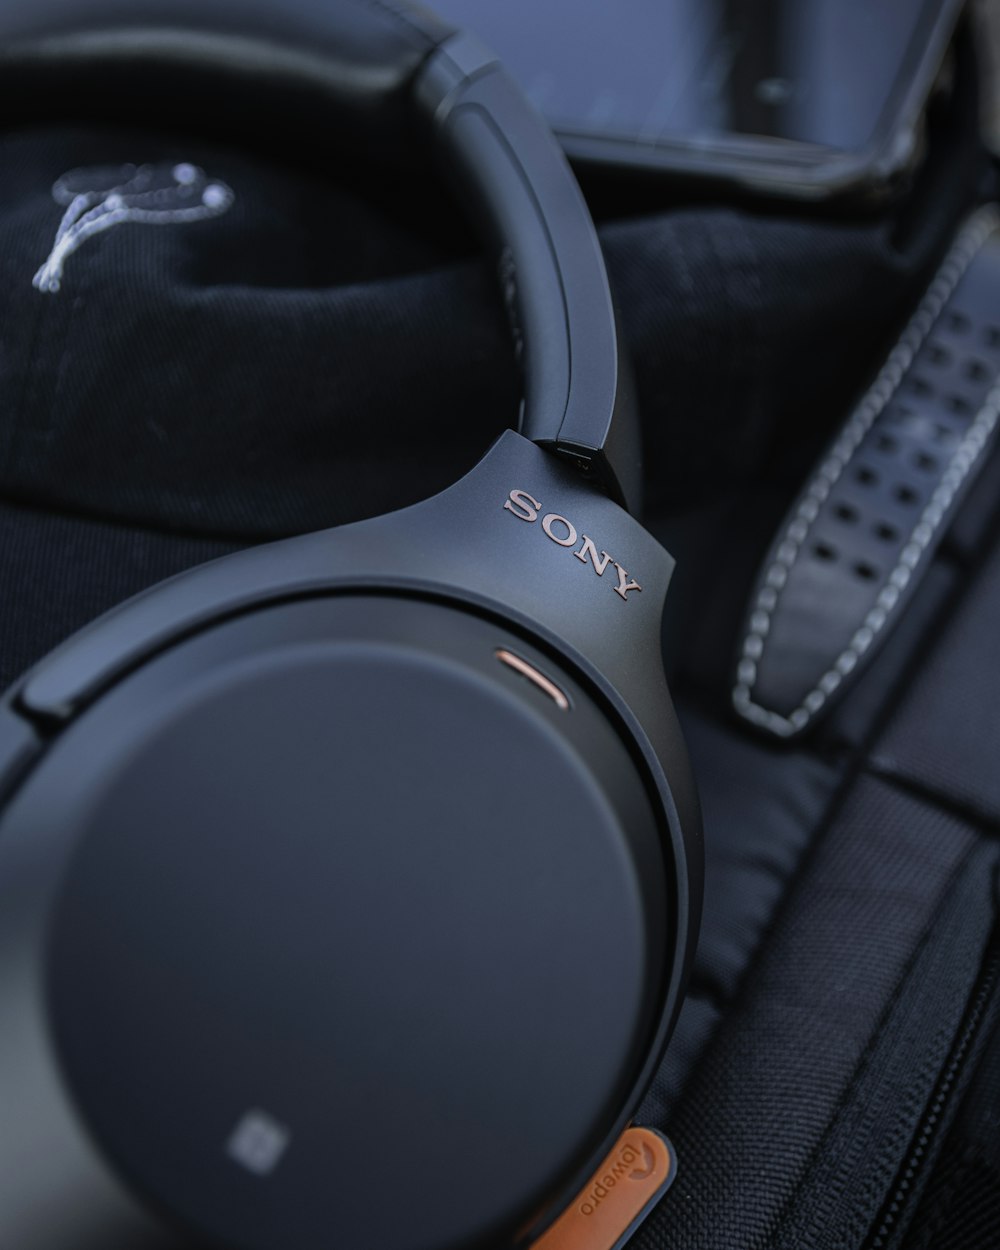 black sony headphones on black textile